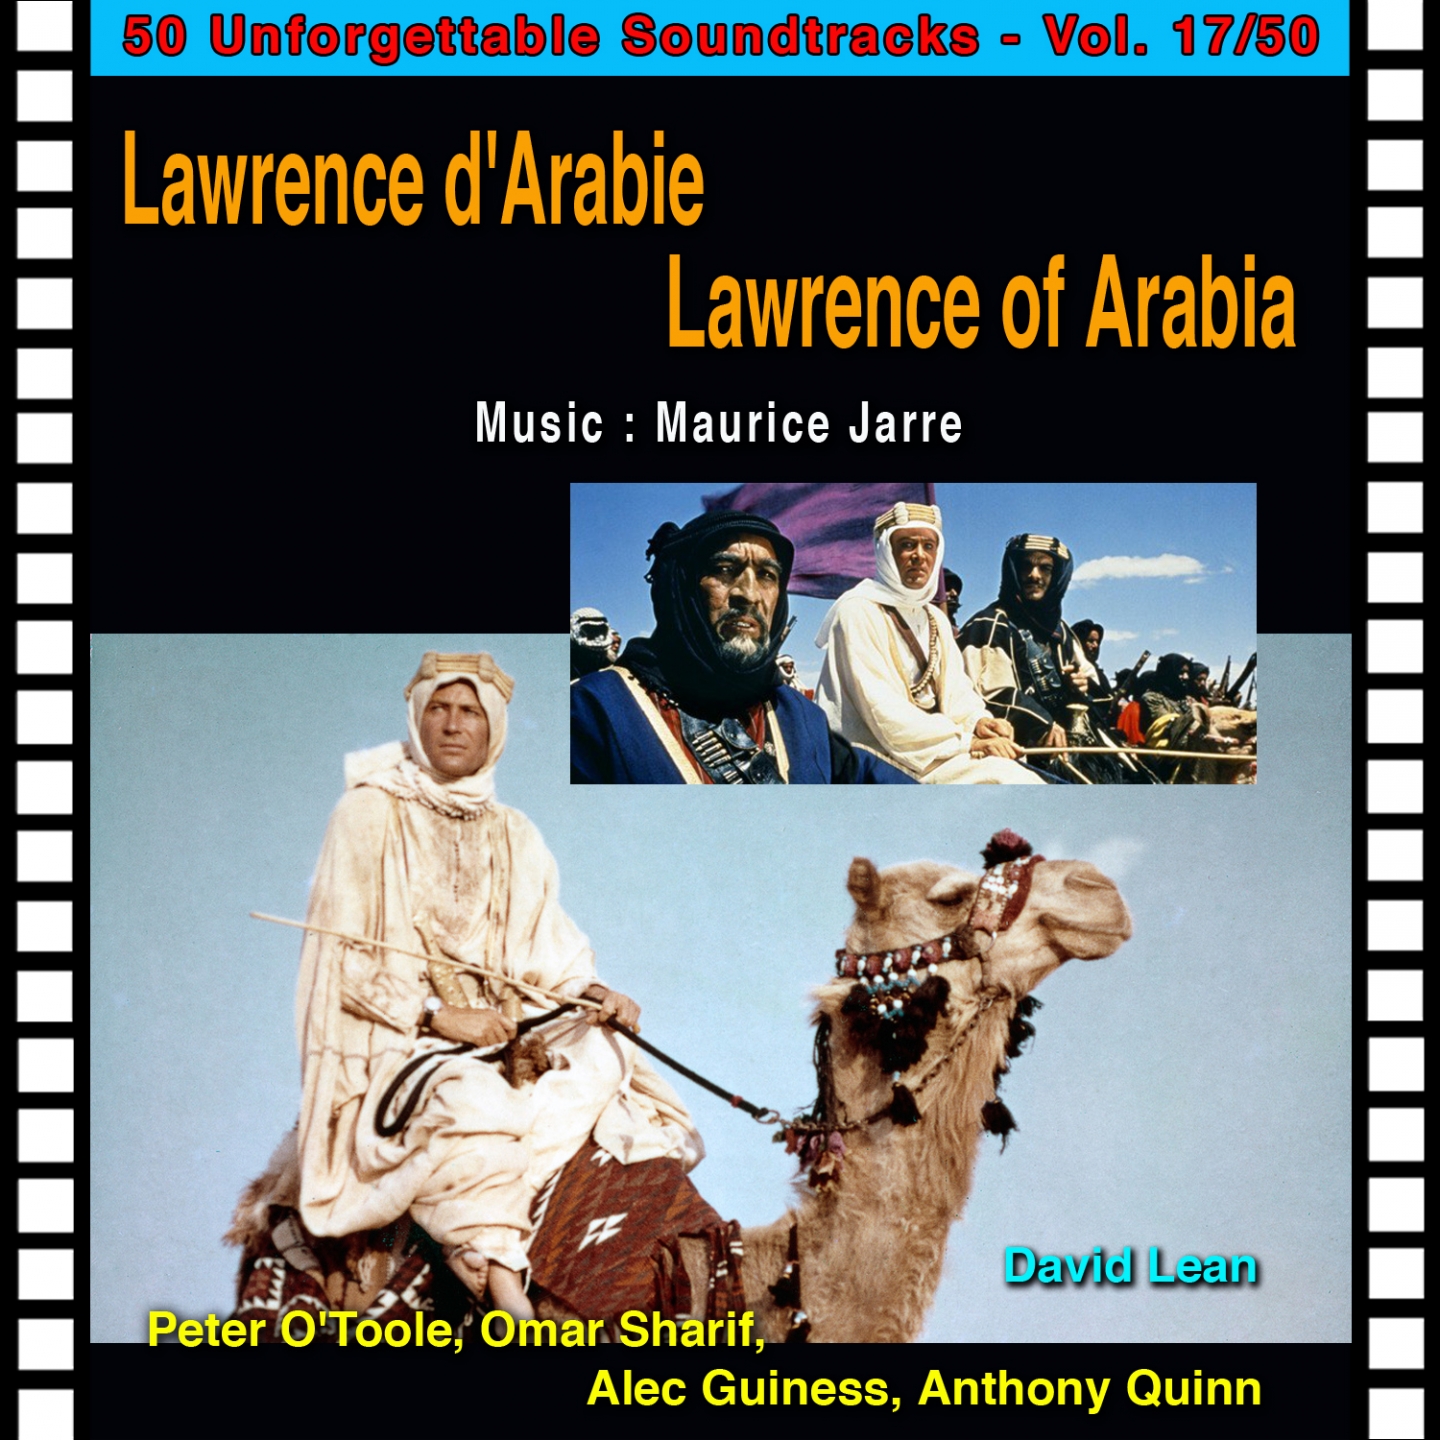 Lawrence of Arabia: The me Ge ne ral Maurice Jarre